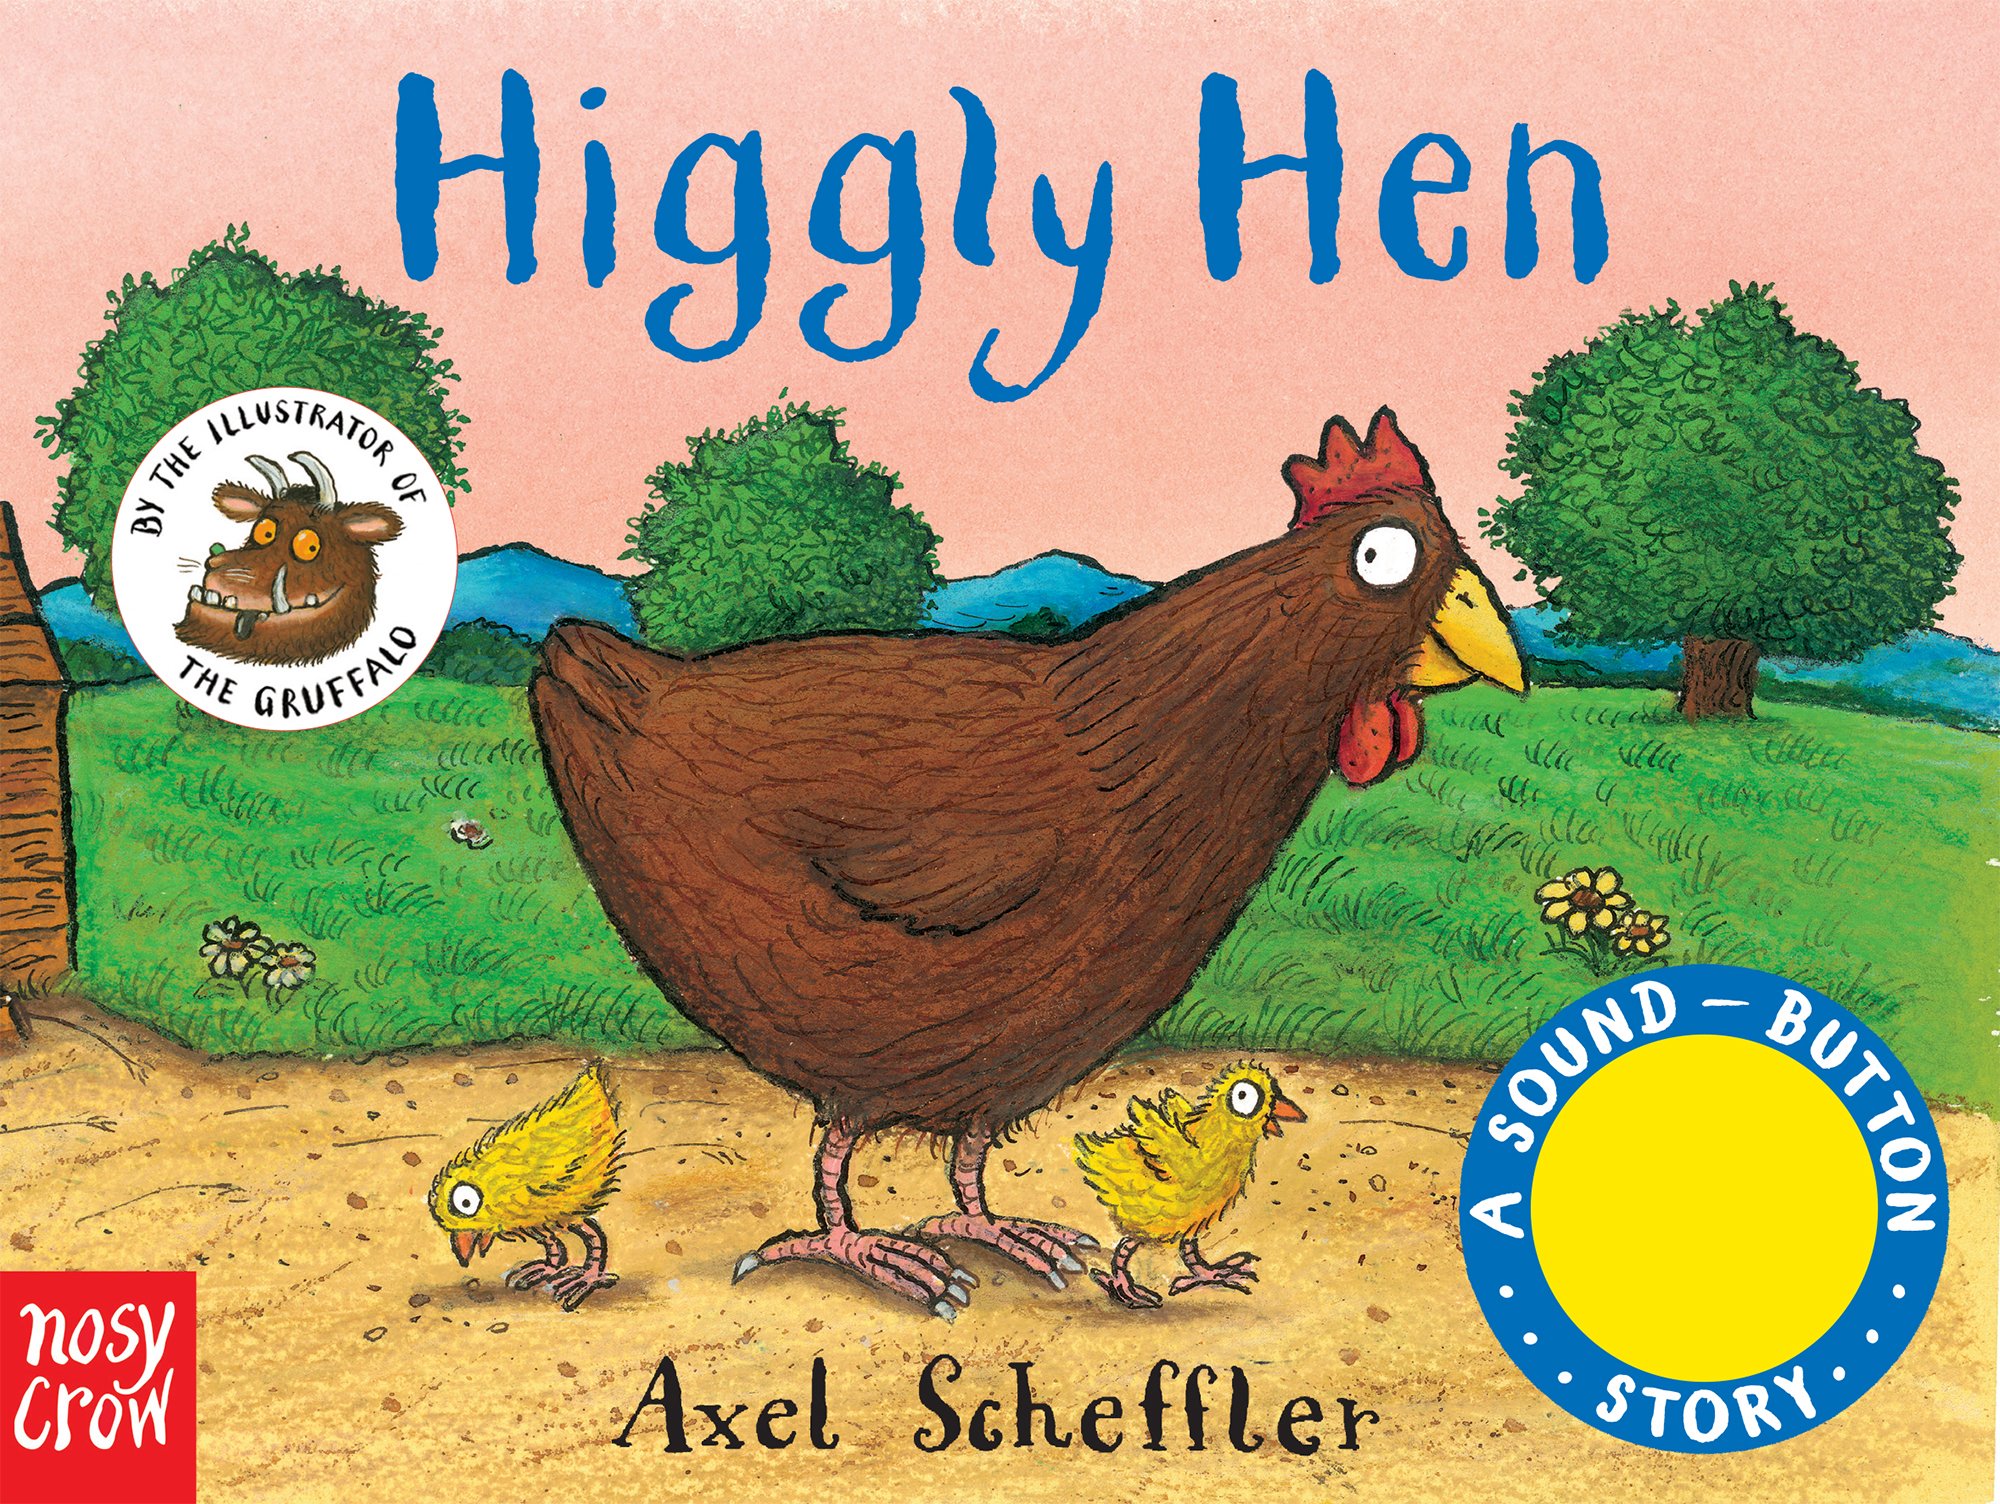 Sound-Button Stories: Higgly Hen - Axel Scheffler